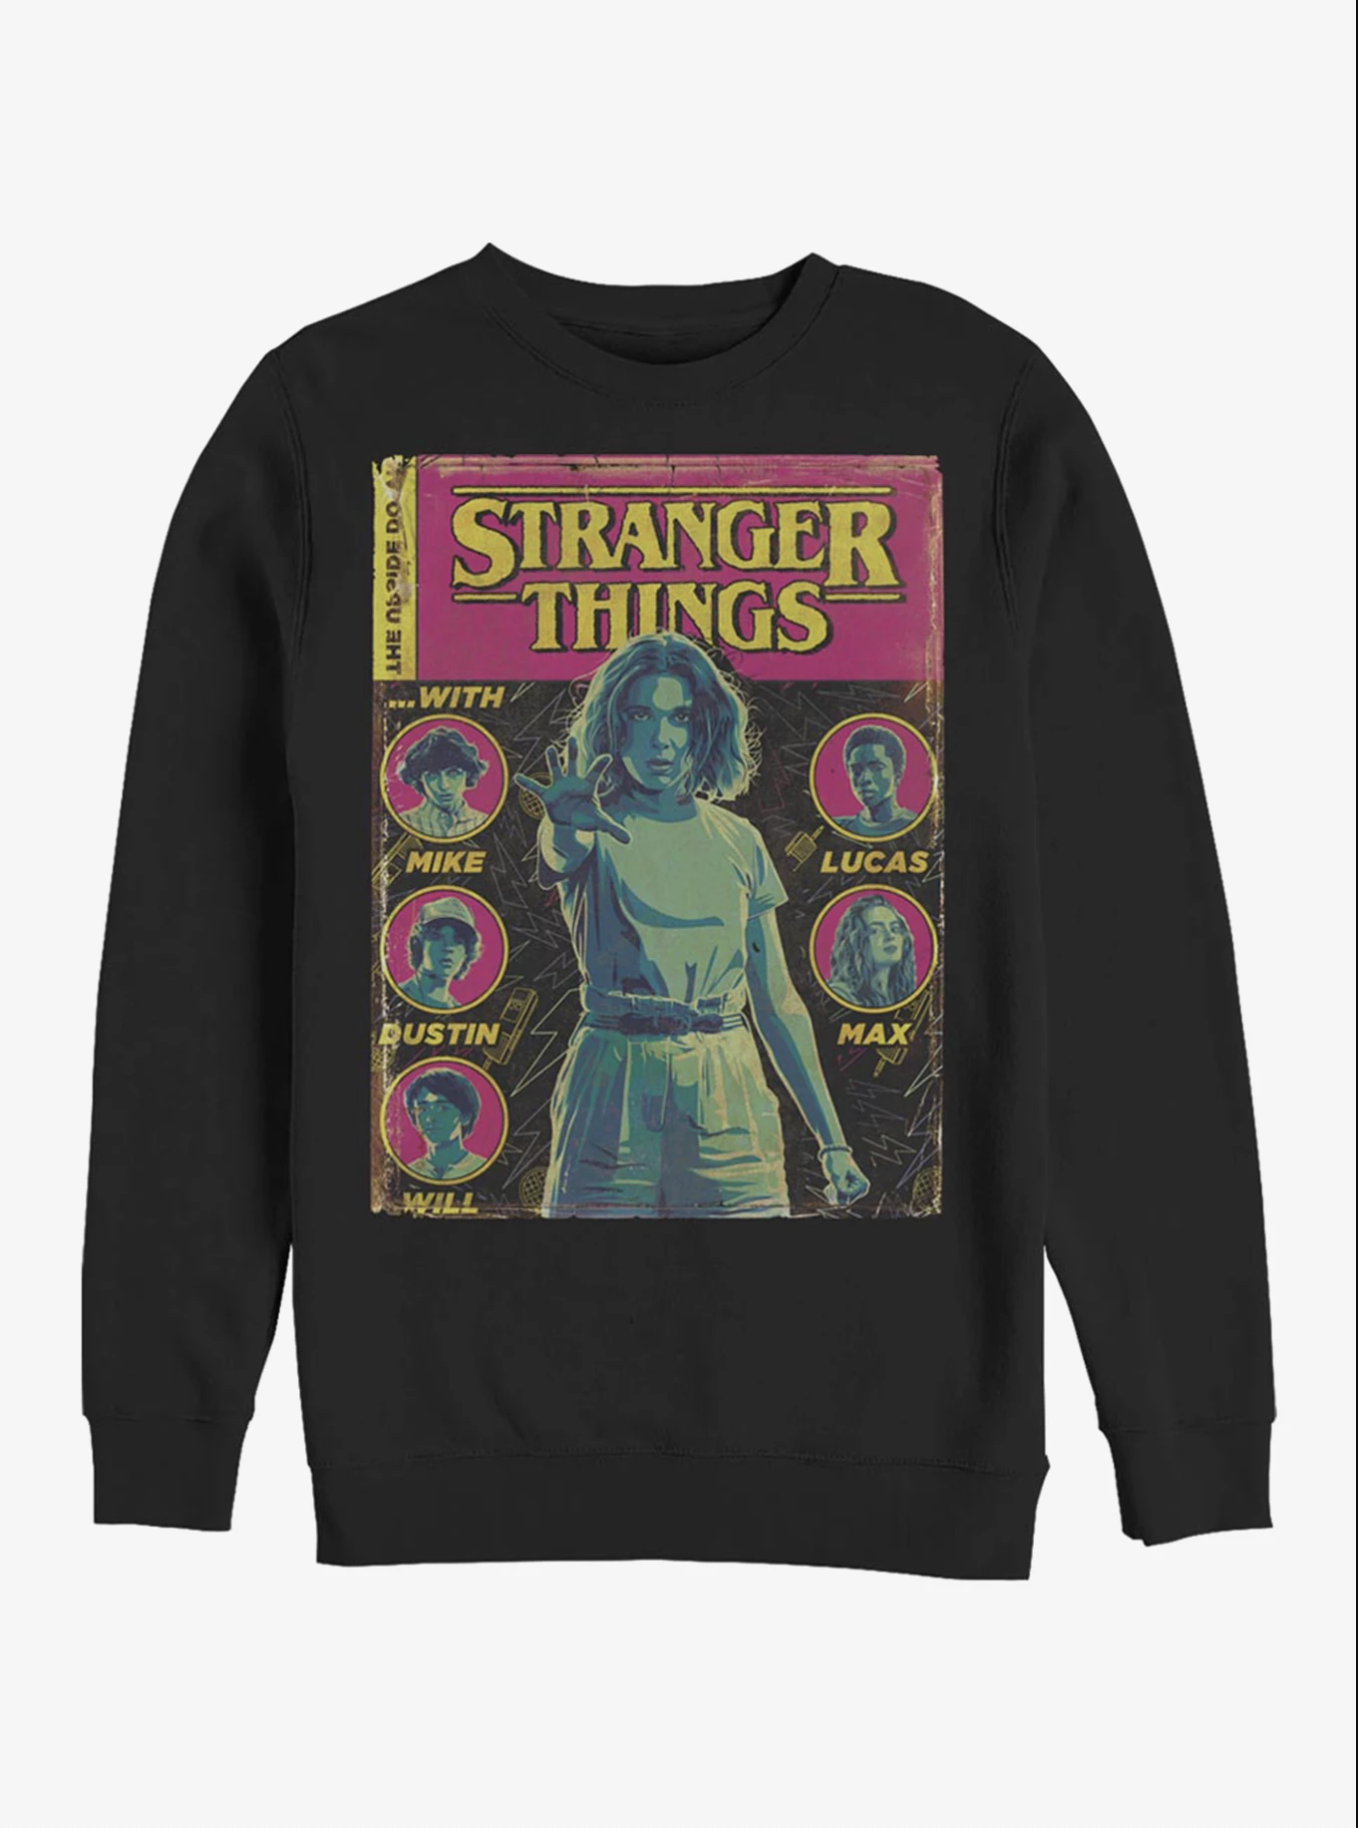 Stranger Things Comic Cover Sweatshirt
